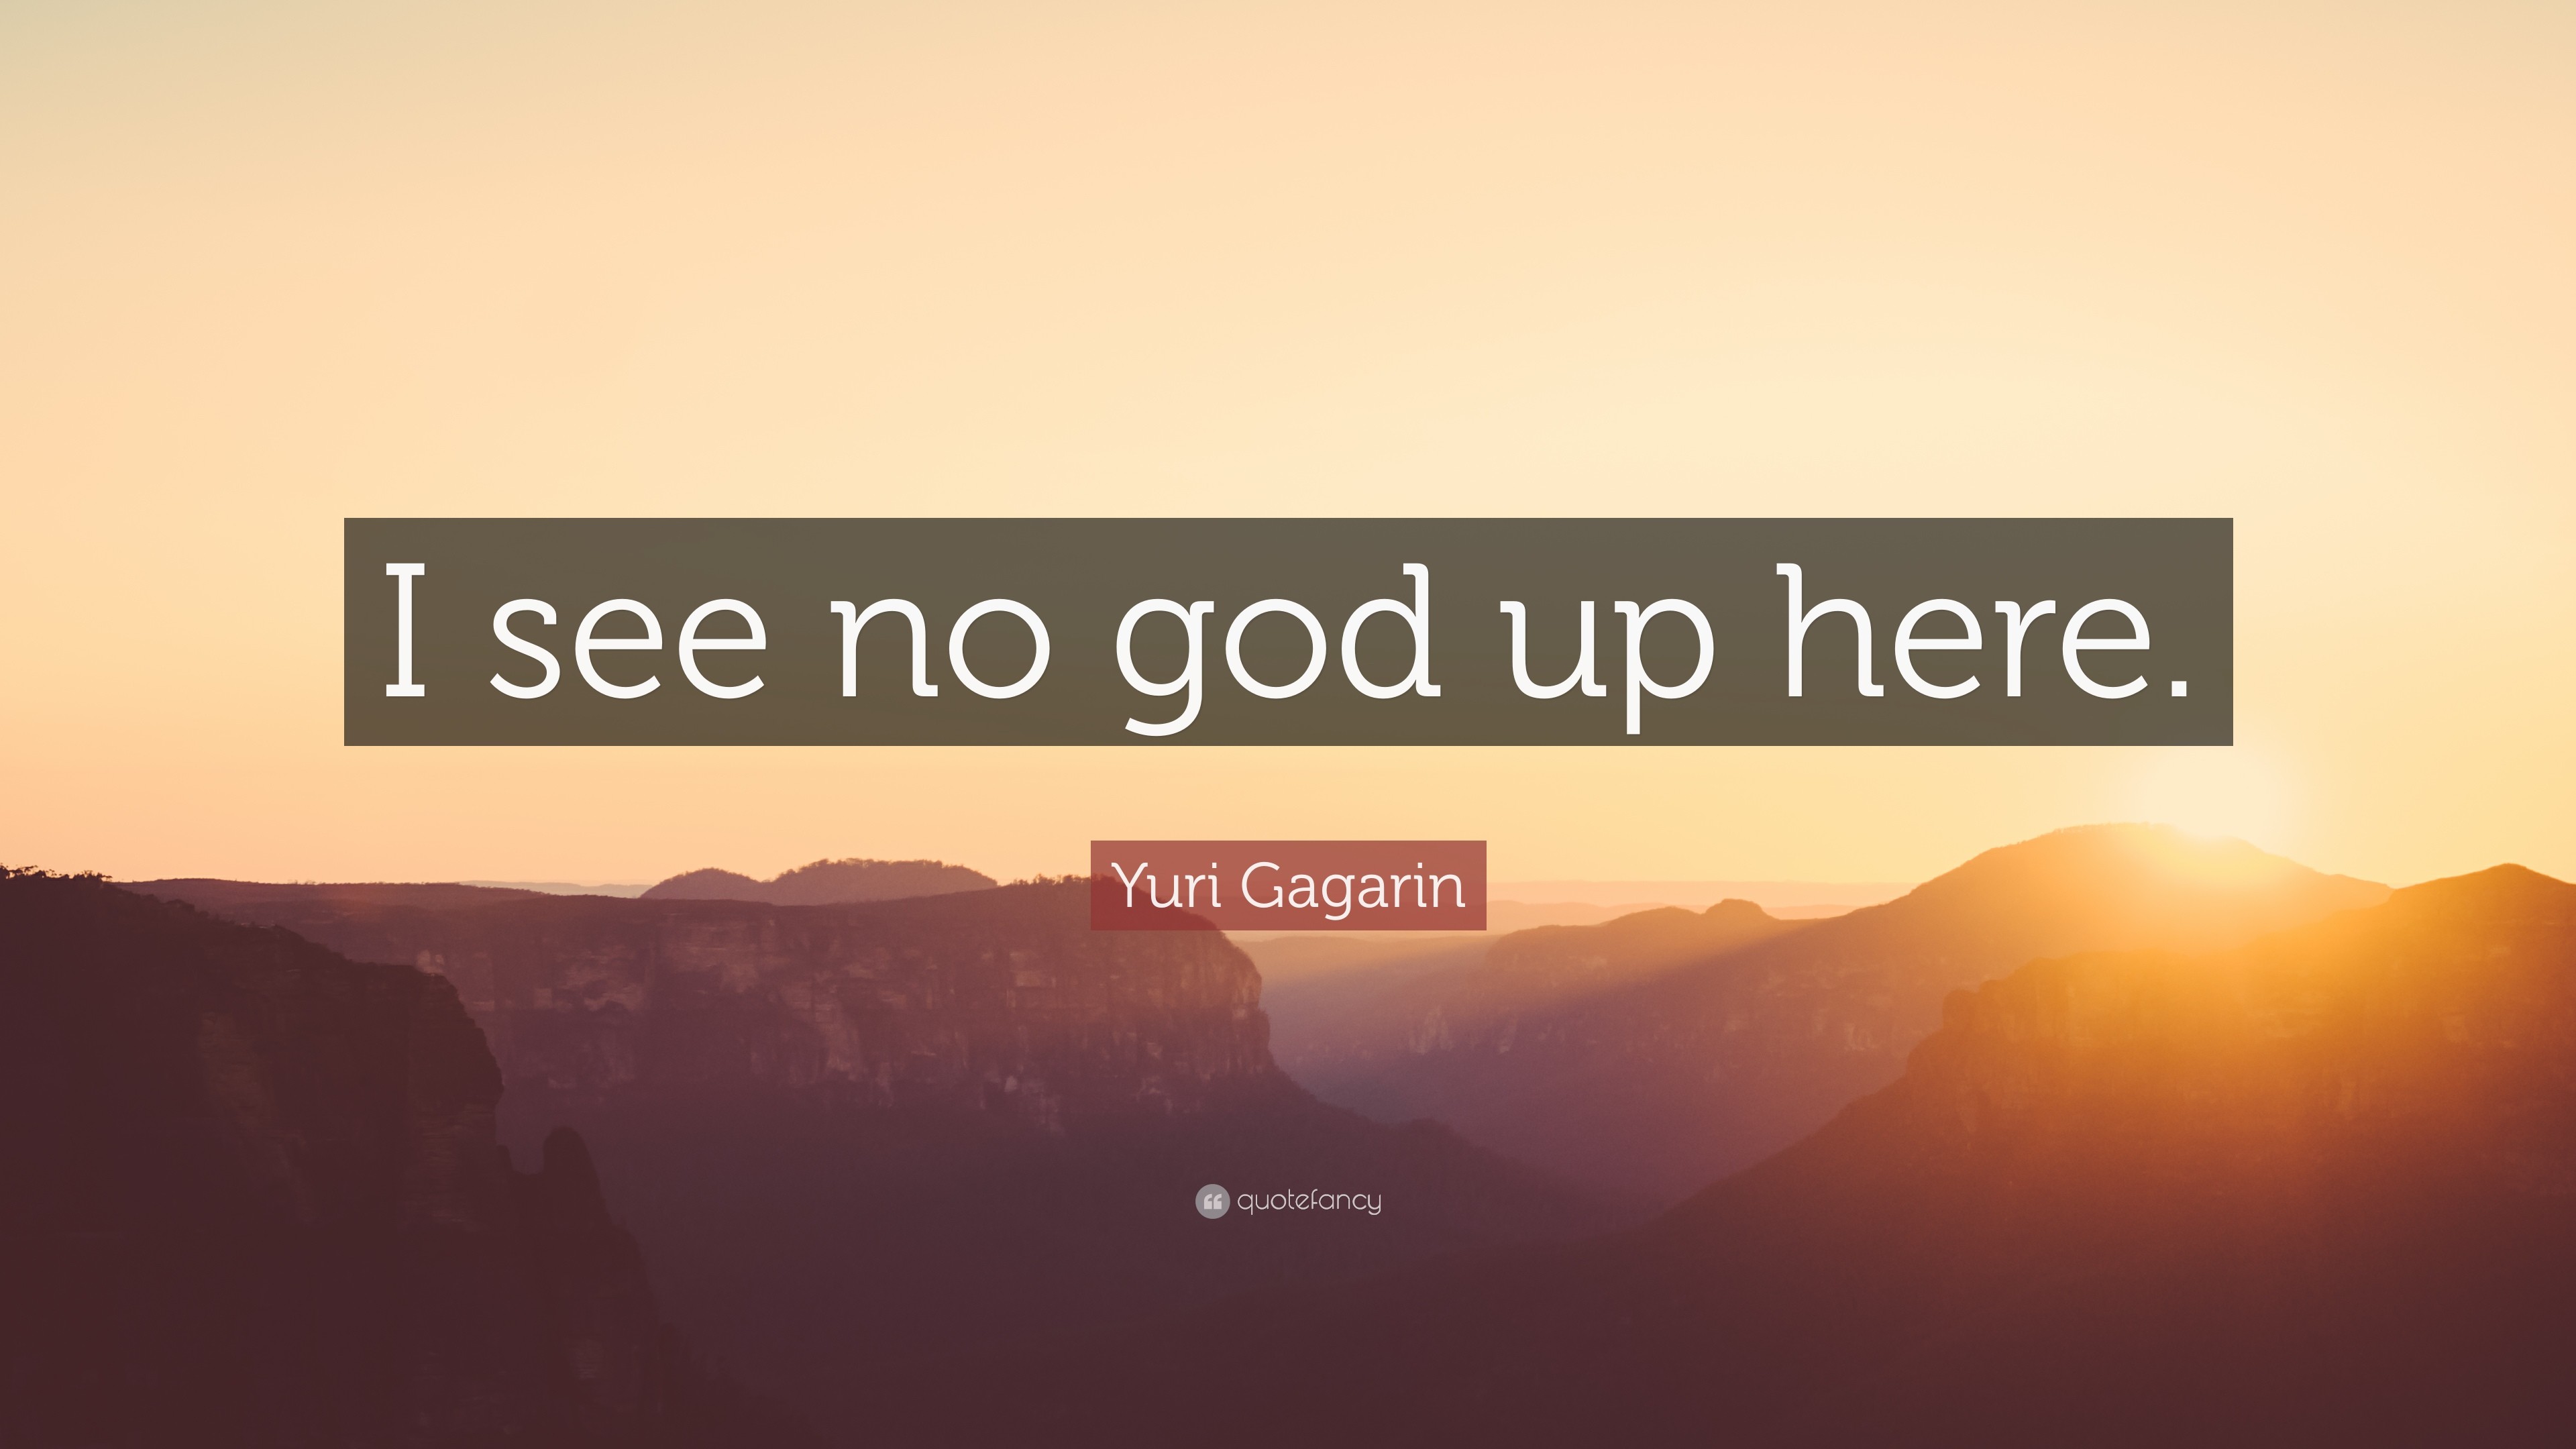 Yuri Gagarin Quote I see no god up here.